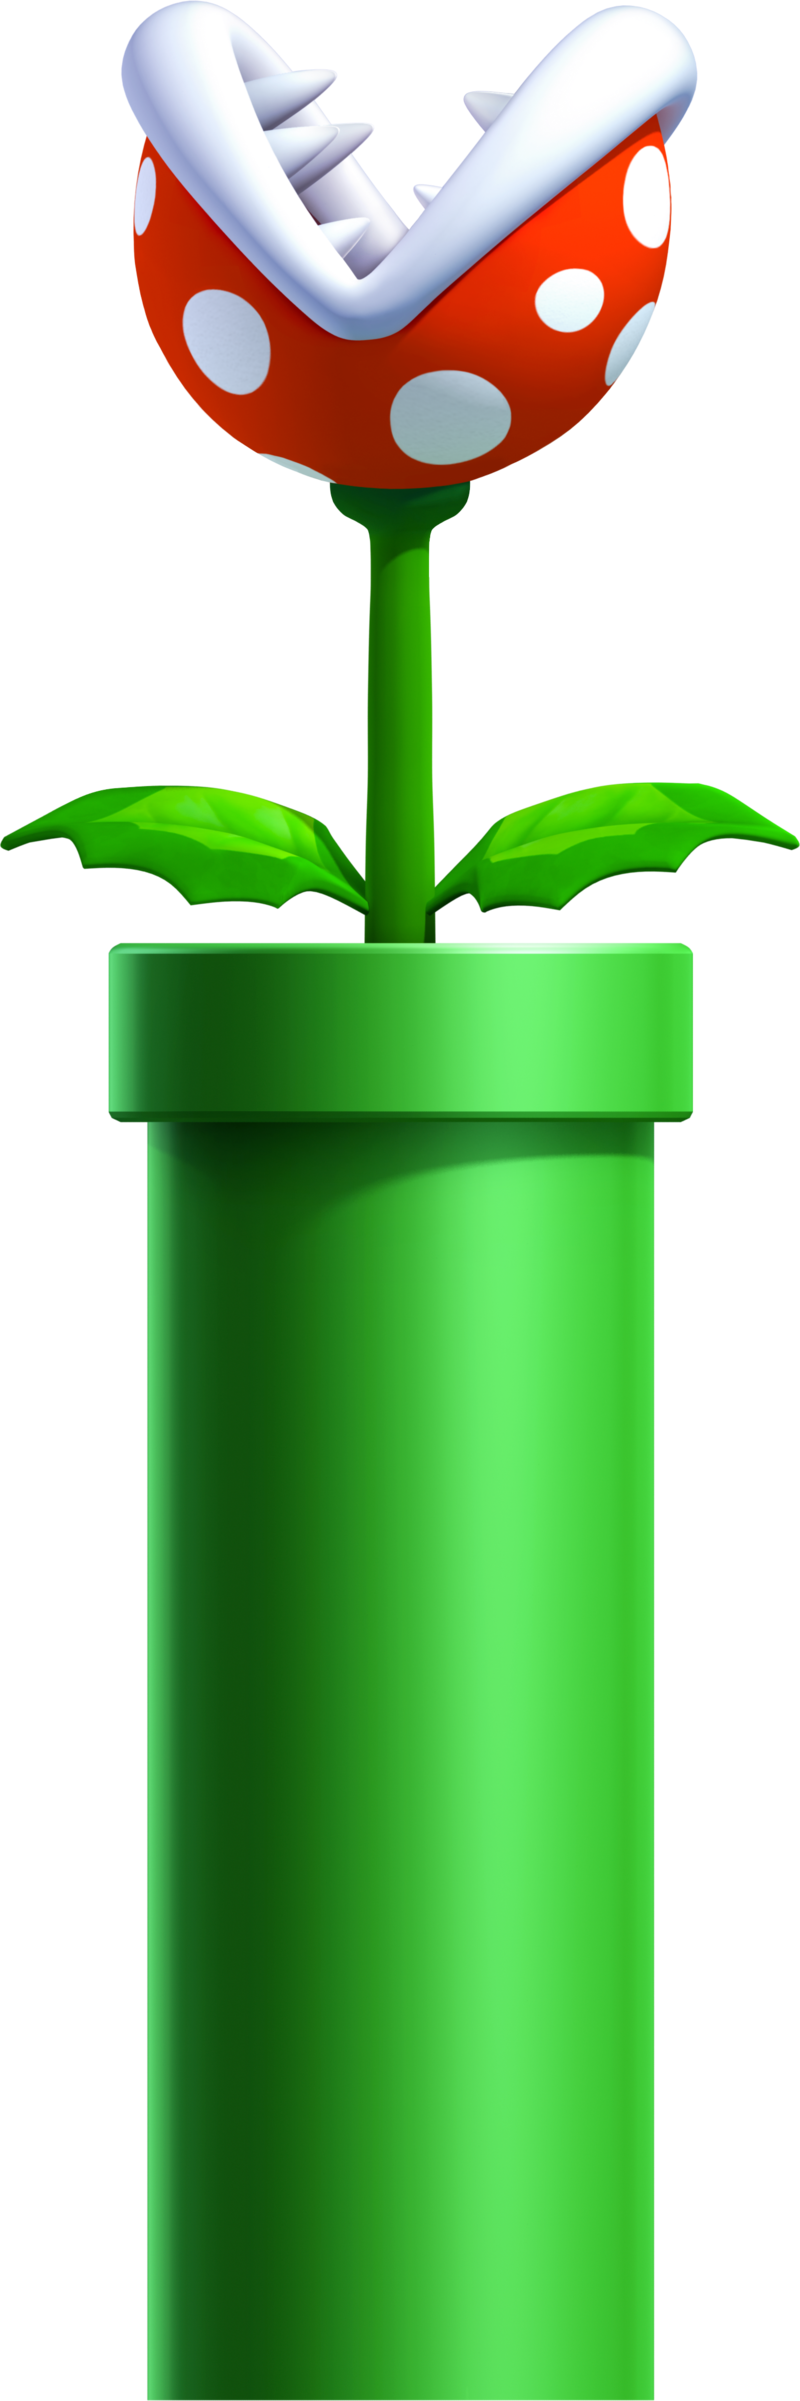 File:Planta Pokemon.svg - Wikimedia Commons